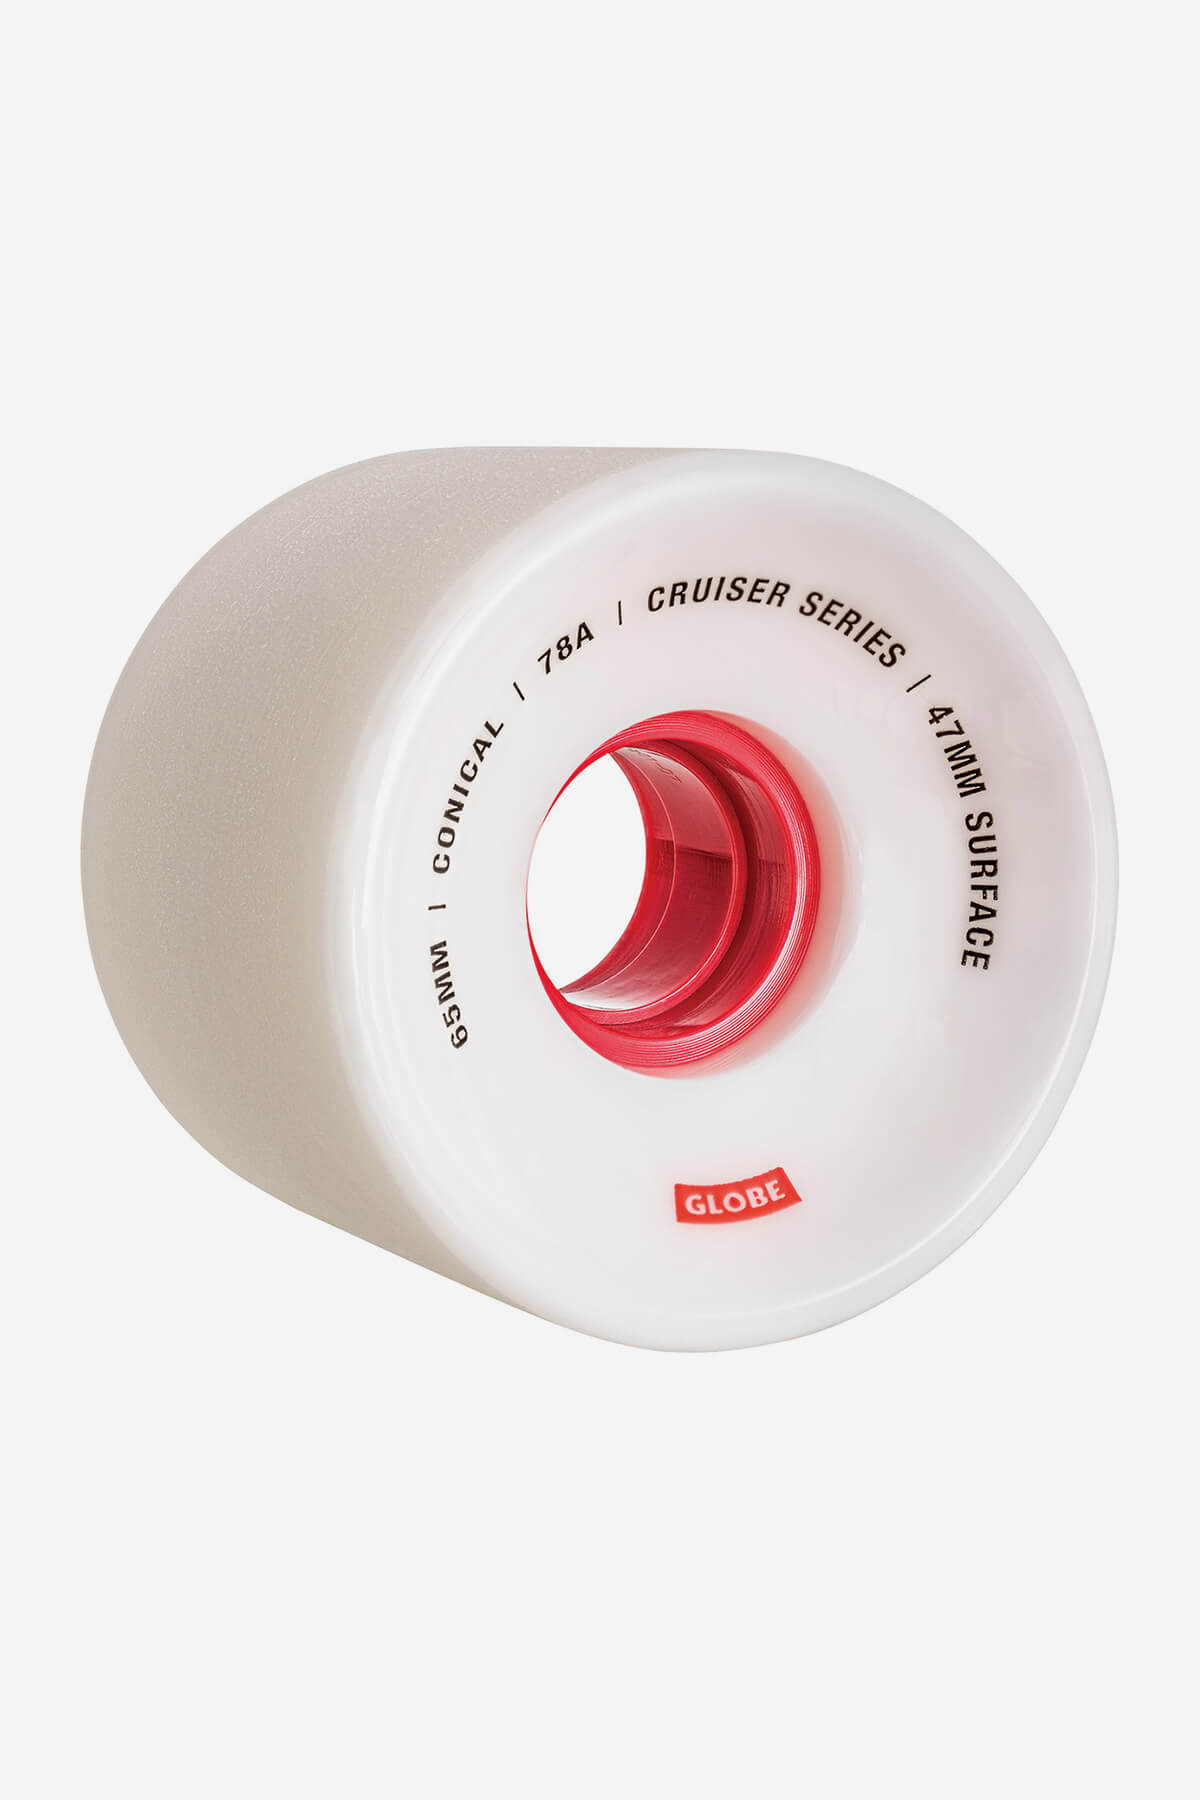 Globe - Conique Cruiser Skateboard Wheel 65Mm - White/Red